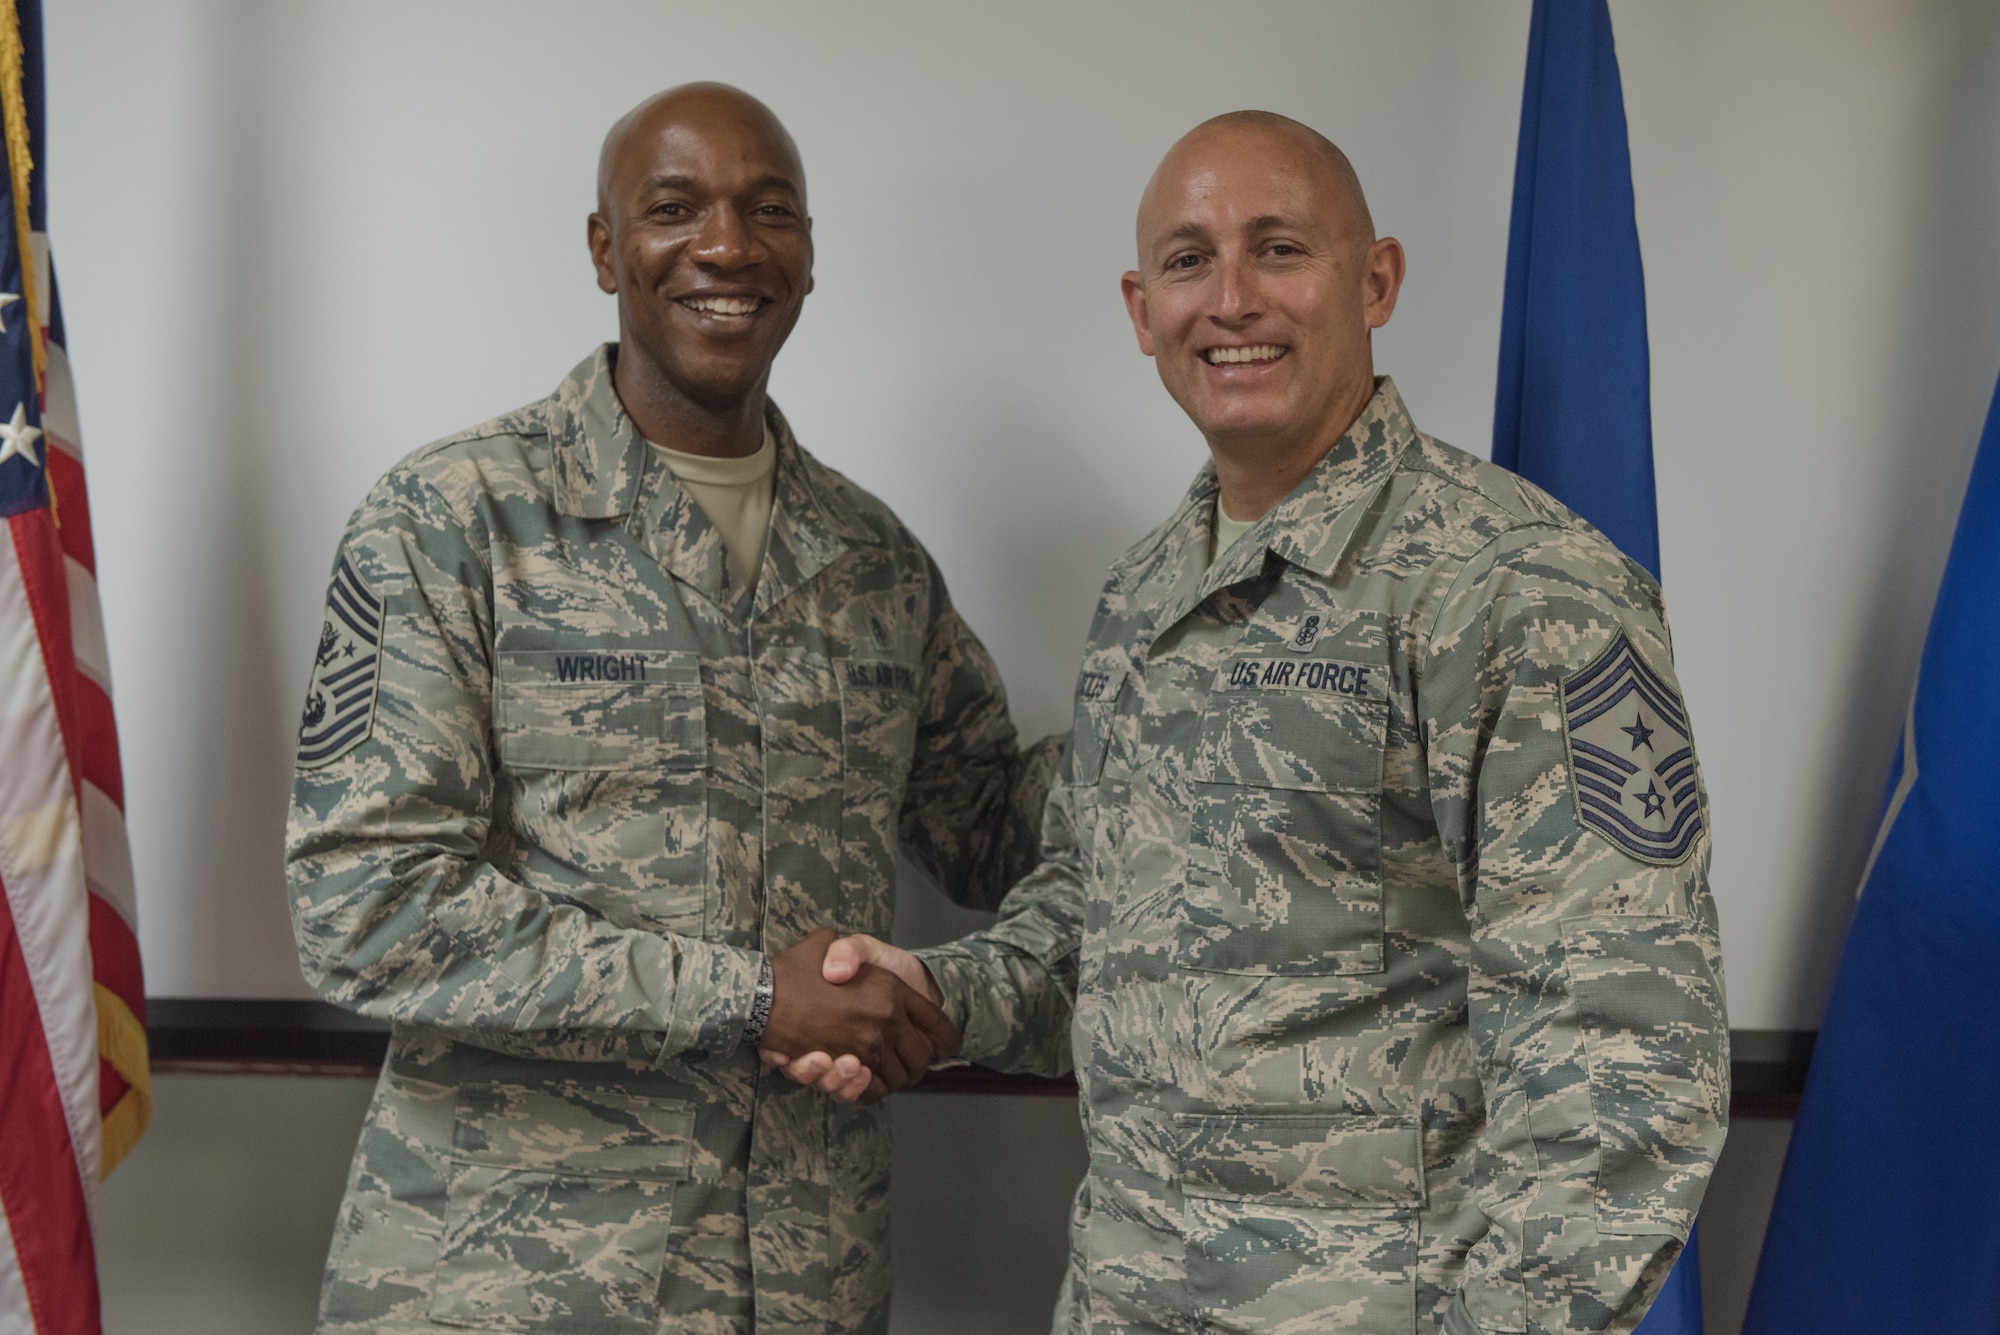 AU’s Barnes Center elevates commandant position to command chief following EPME revitalization